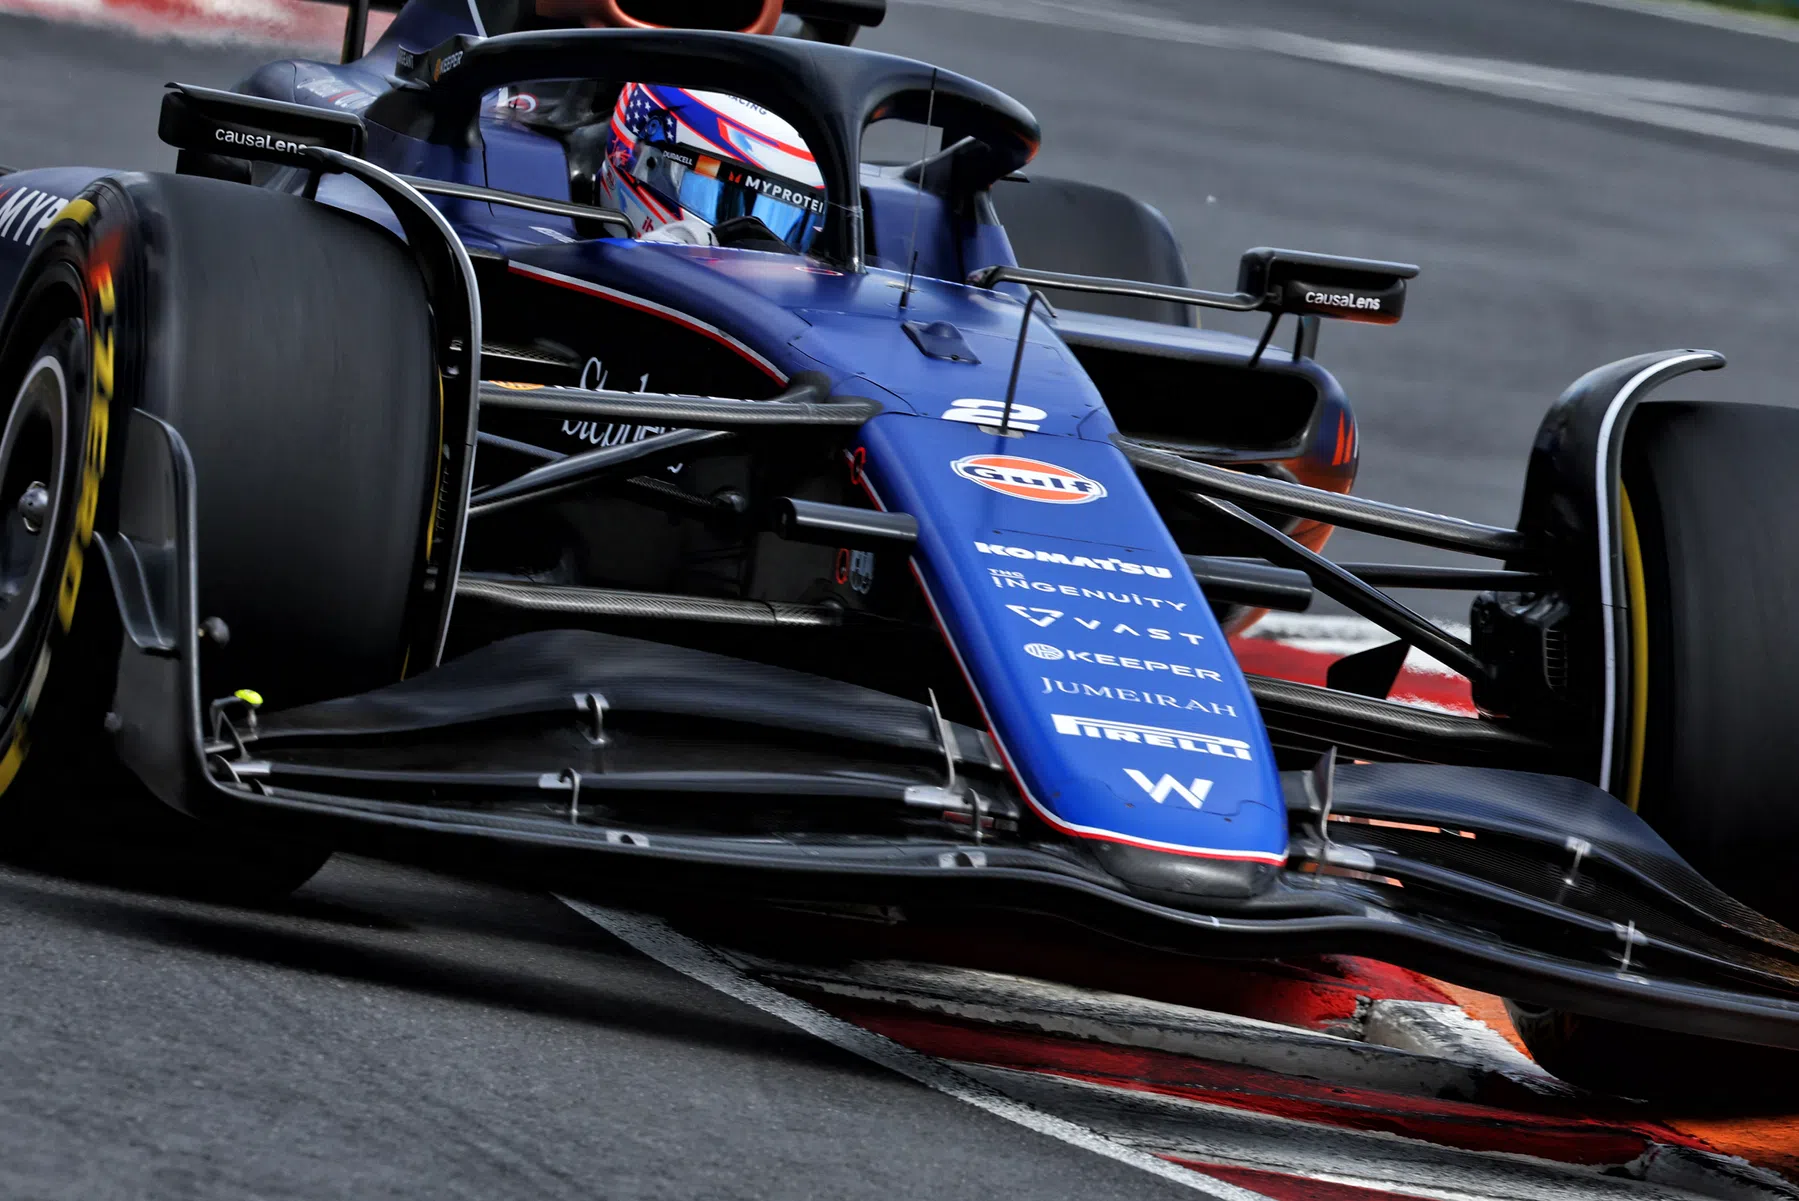 sargeant avoids crash with McLaren in FP3